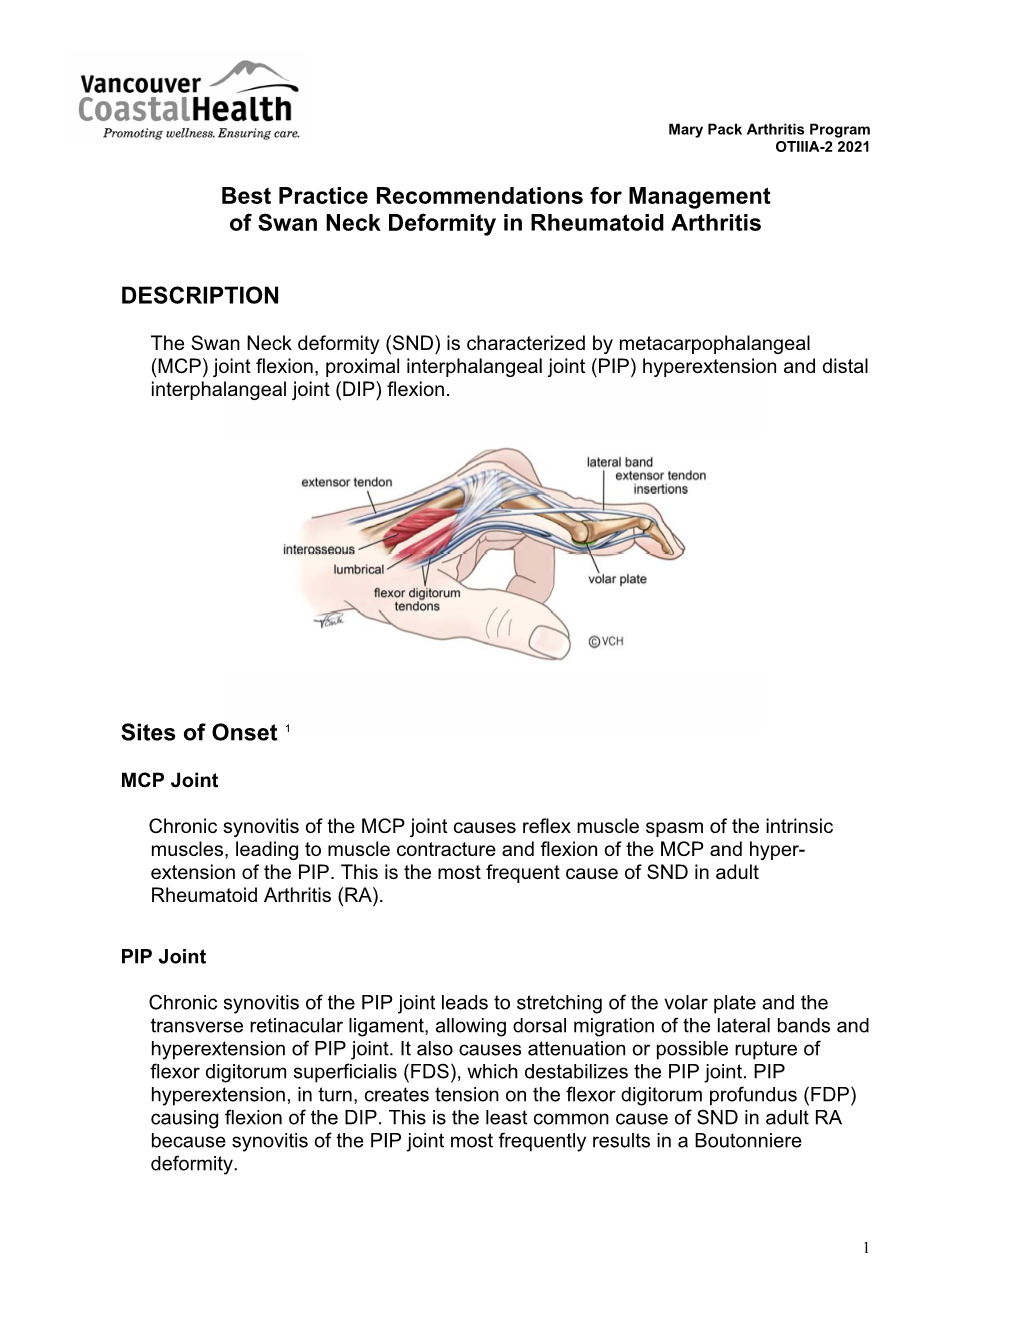 Best Practice Recommendations for Management of Swan Neck Deformity in Rheumatoid Arthritis